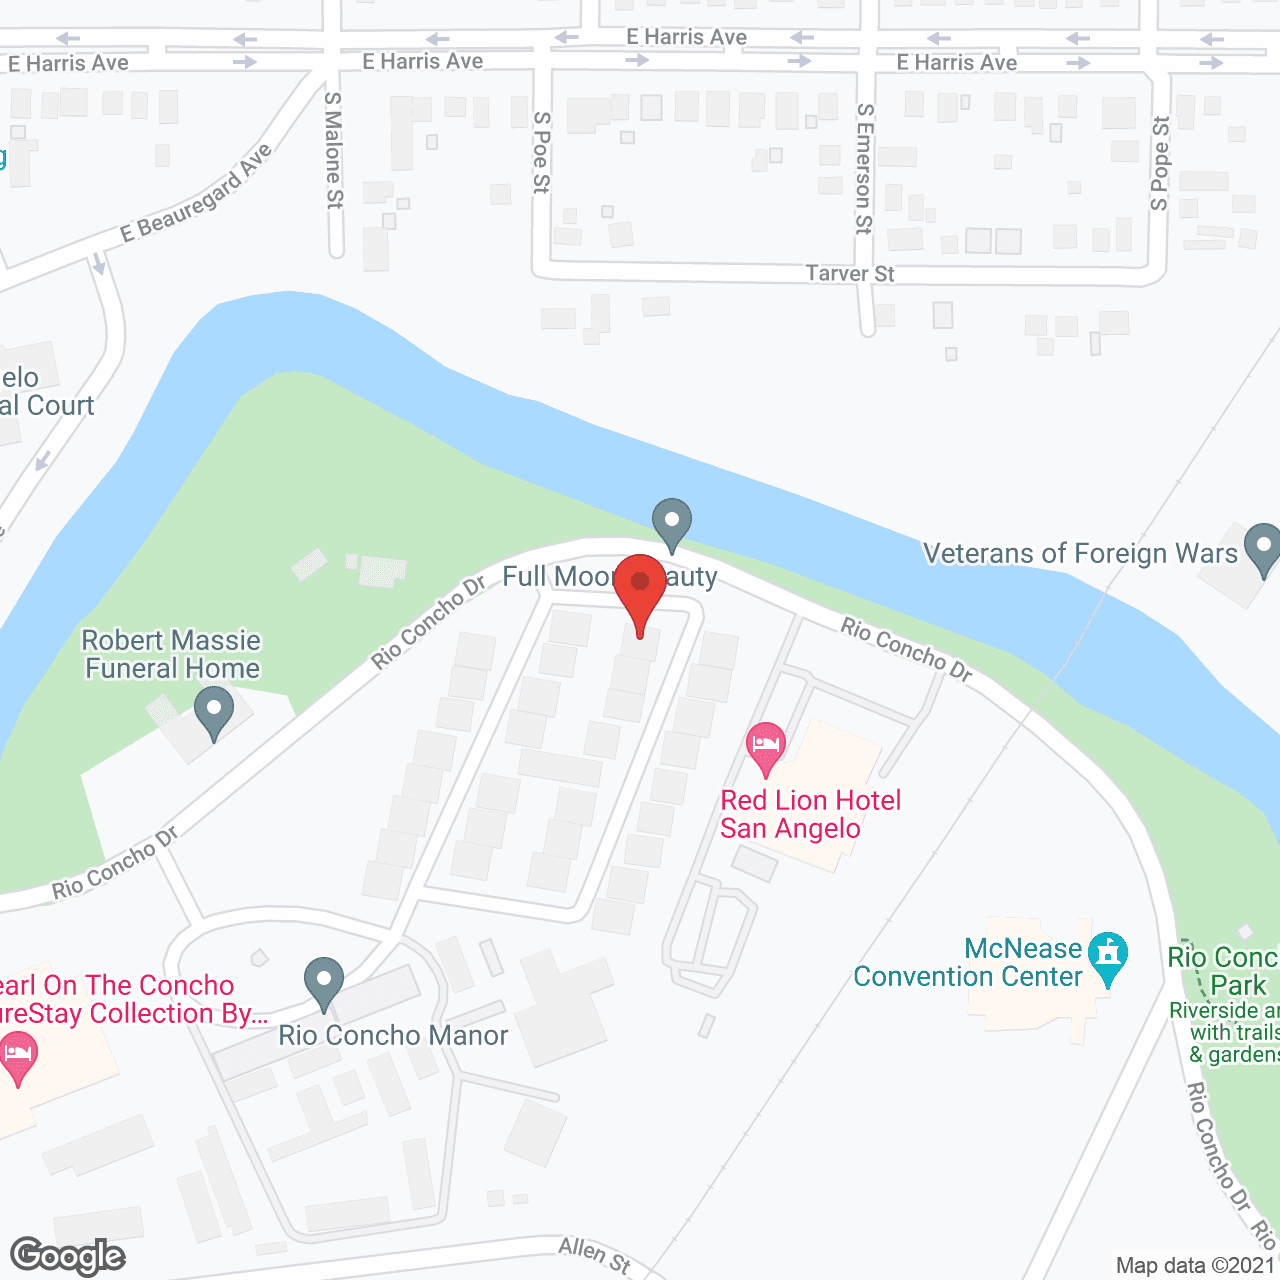 Rio Concho East in google map